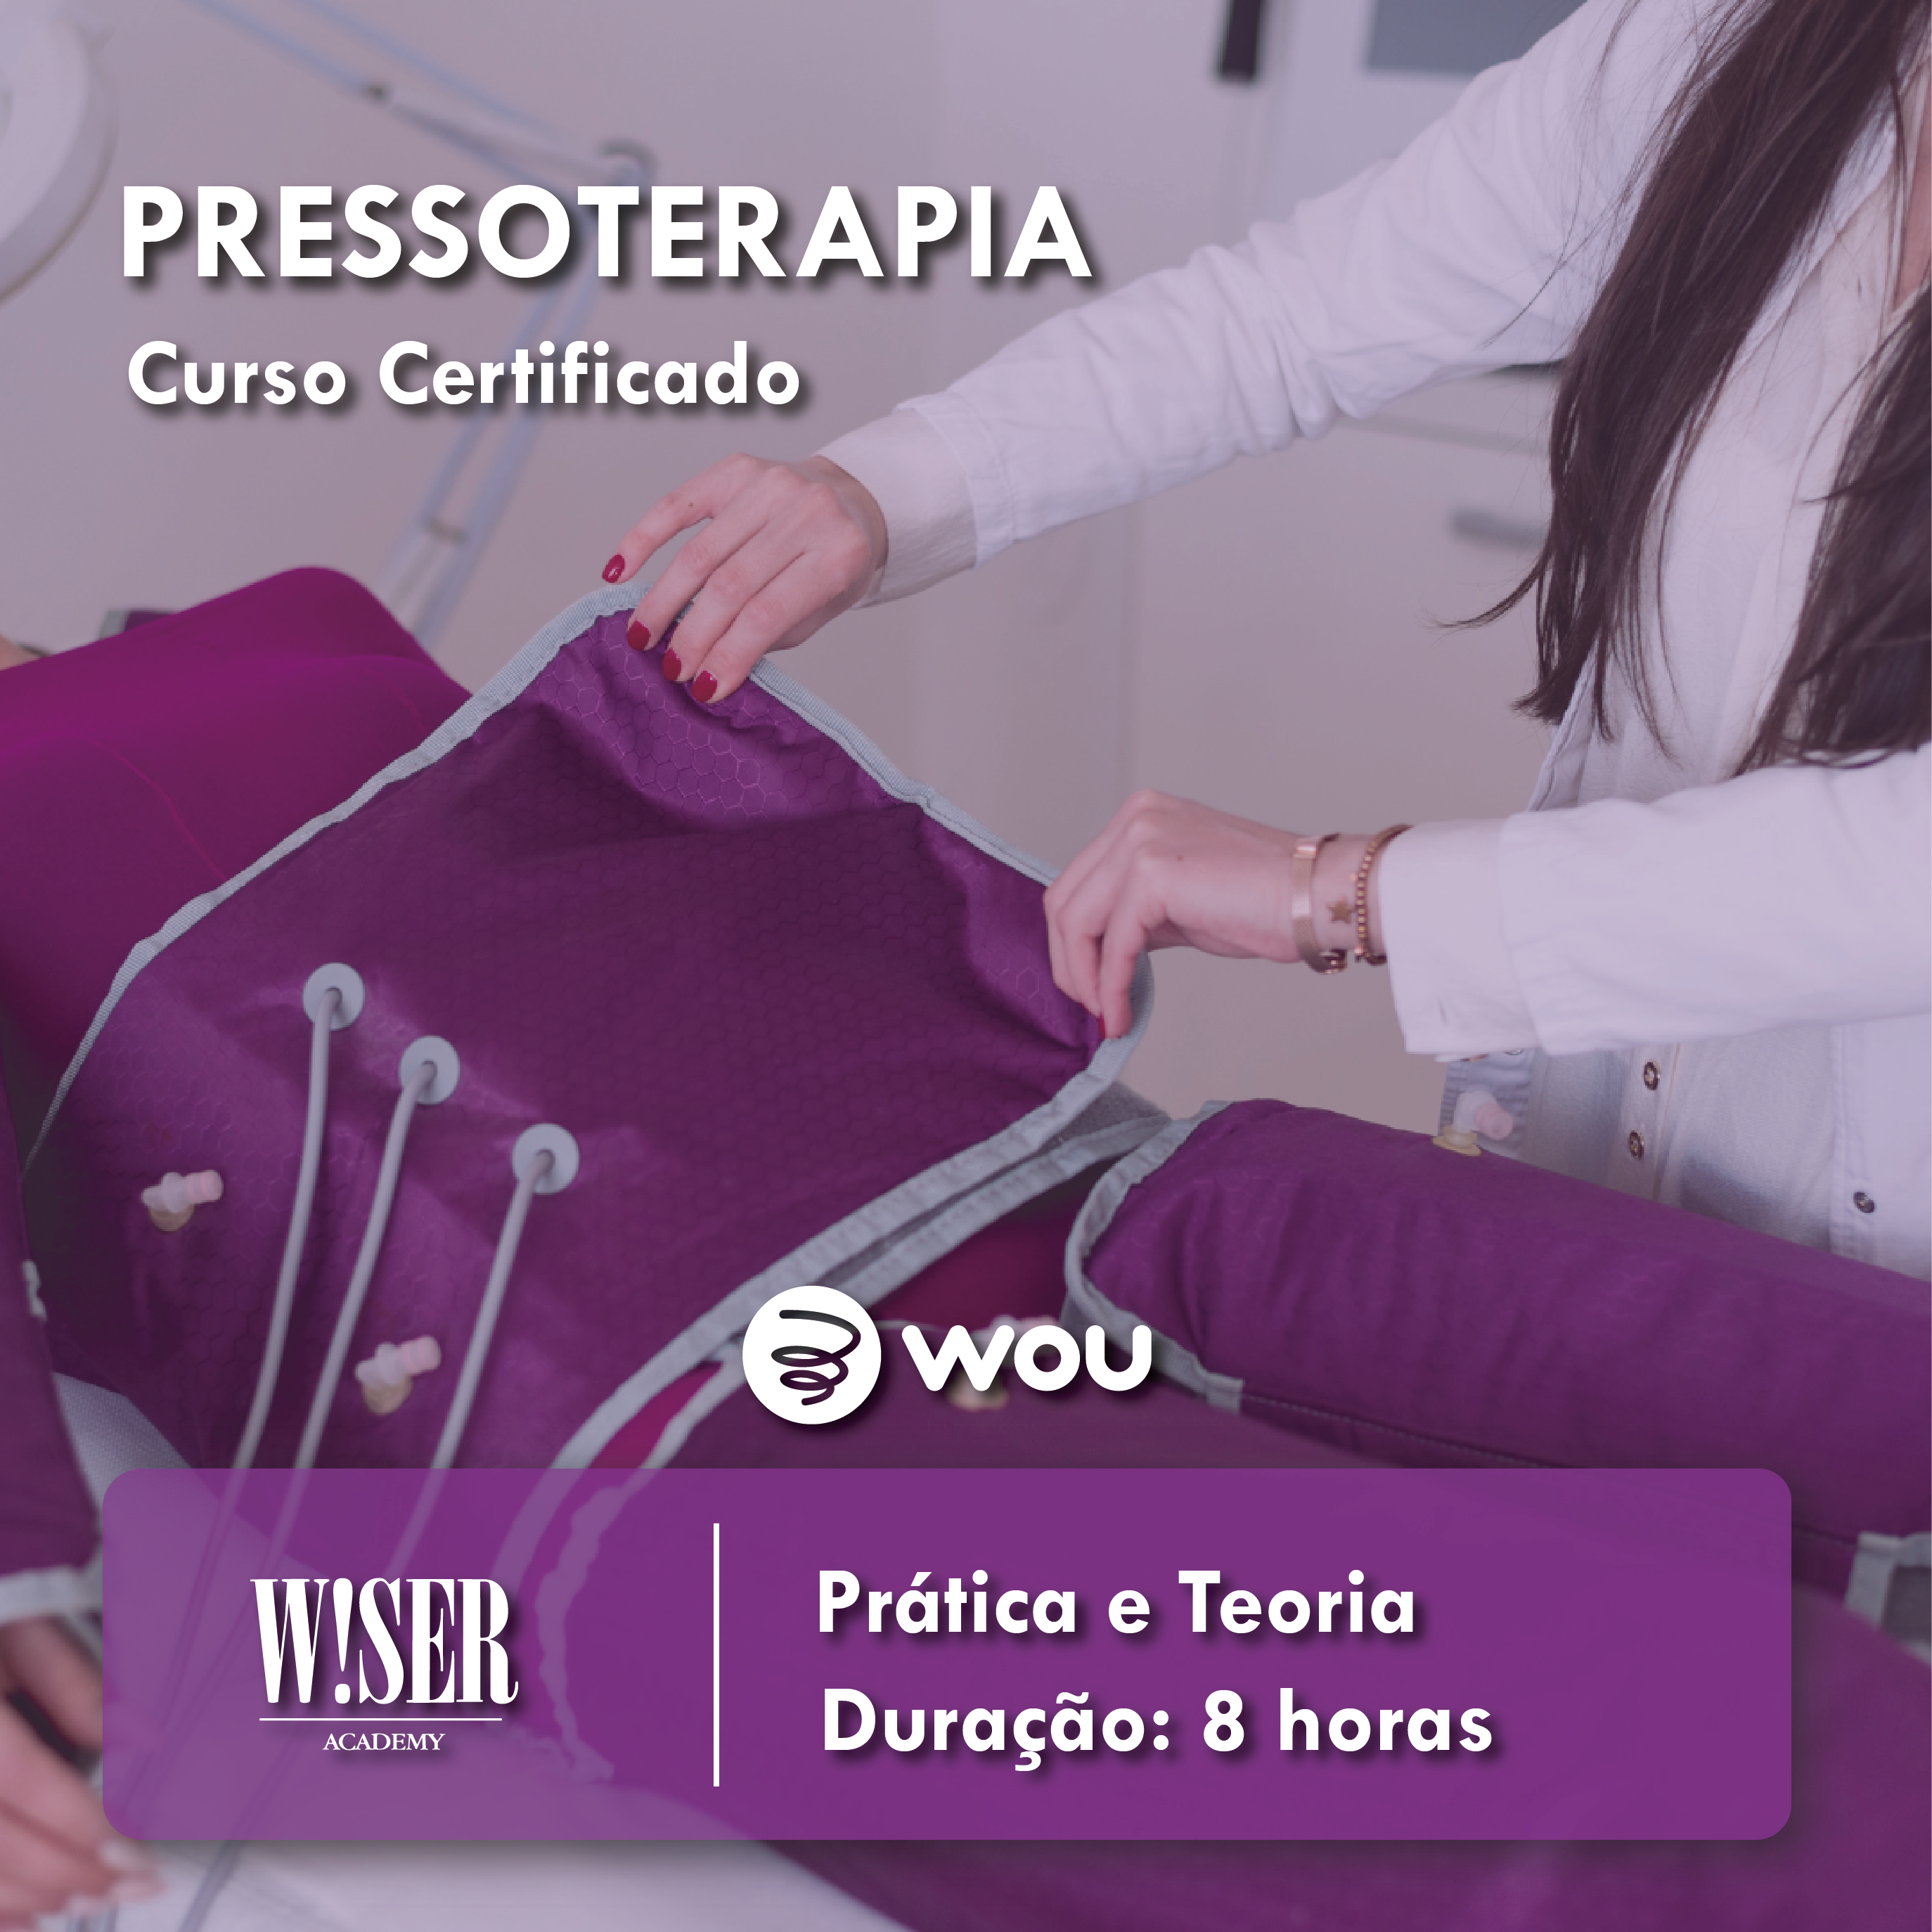 Pressotherapy Course in Coimbra